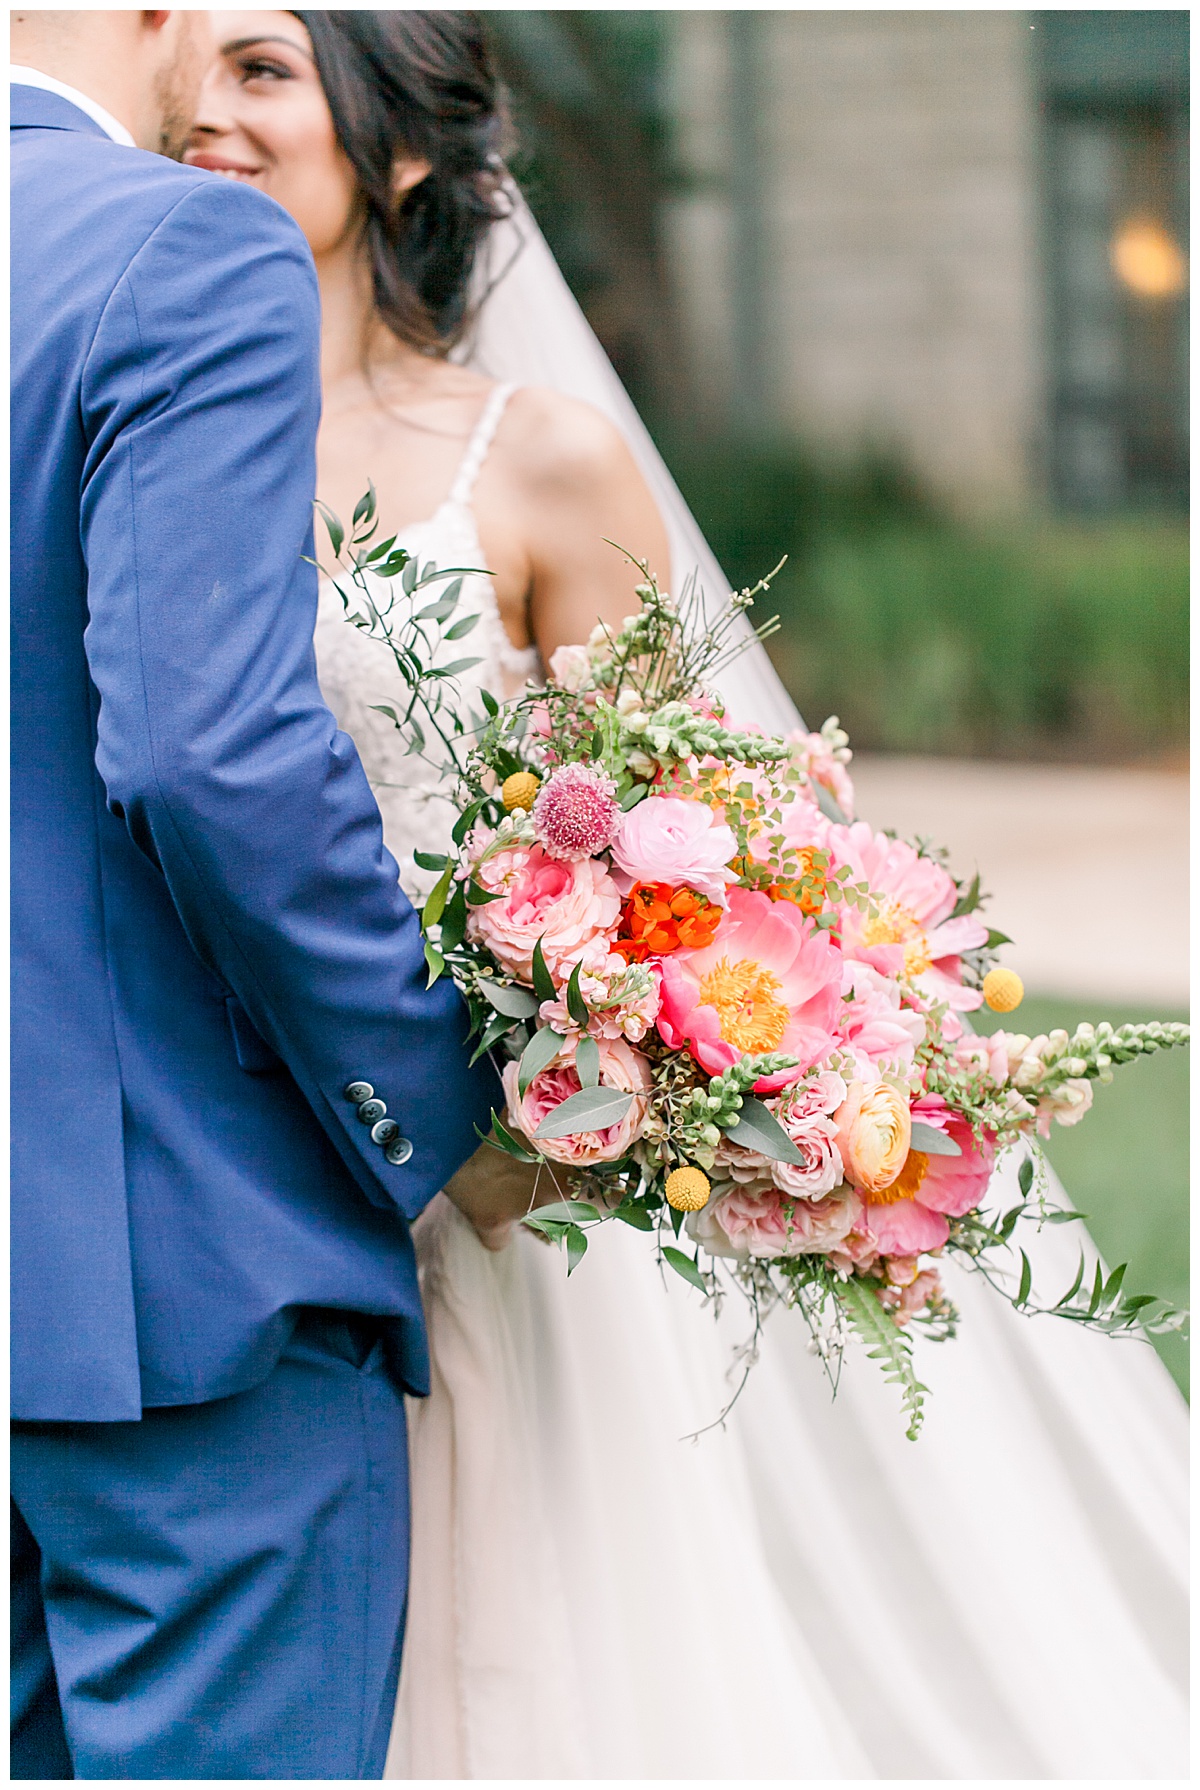 Bridal bouquet at Hyatt Regency Hill Country Resort Wedding in San Antonio, TX | San Antonio Wedding photographer| Destination Wedding Photographer| Monica Roberts Photography | monicaroberts.com